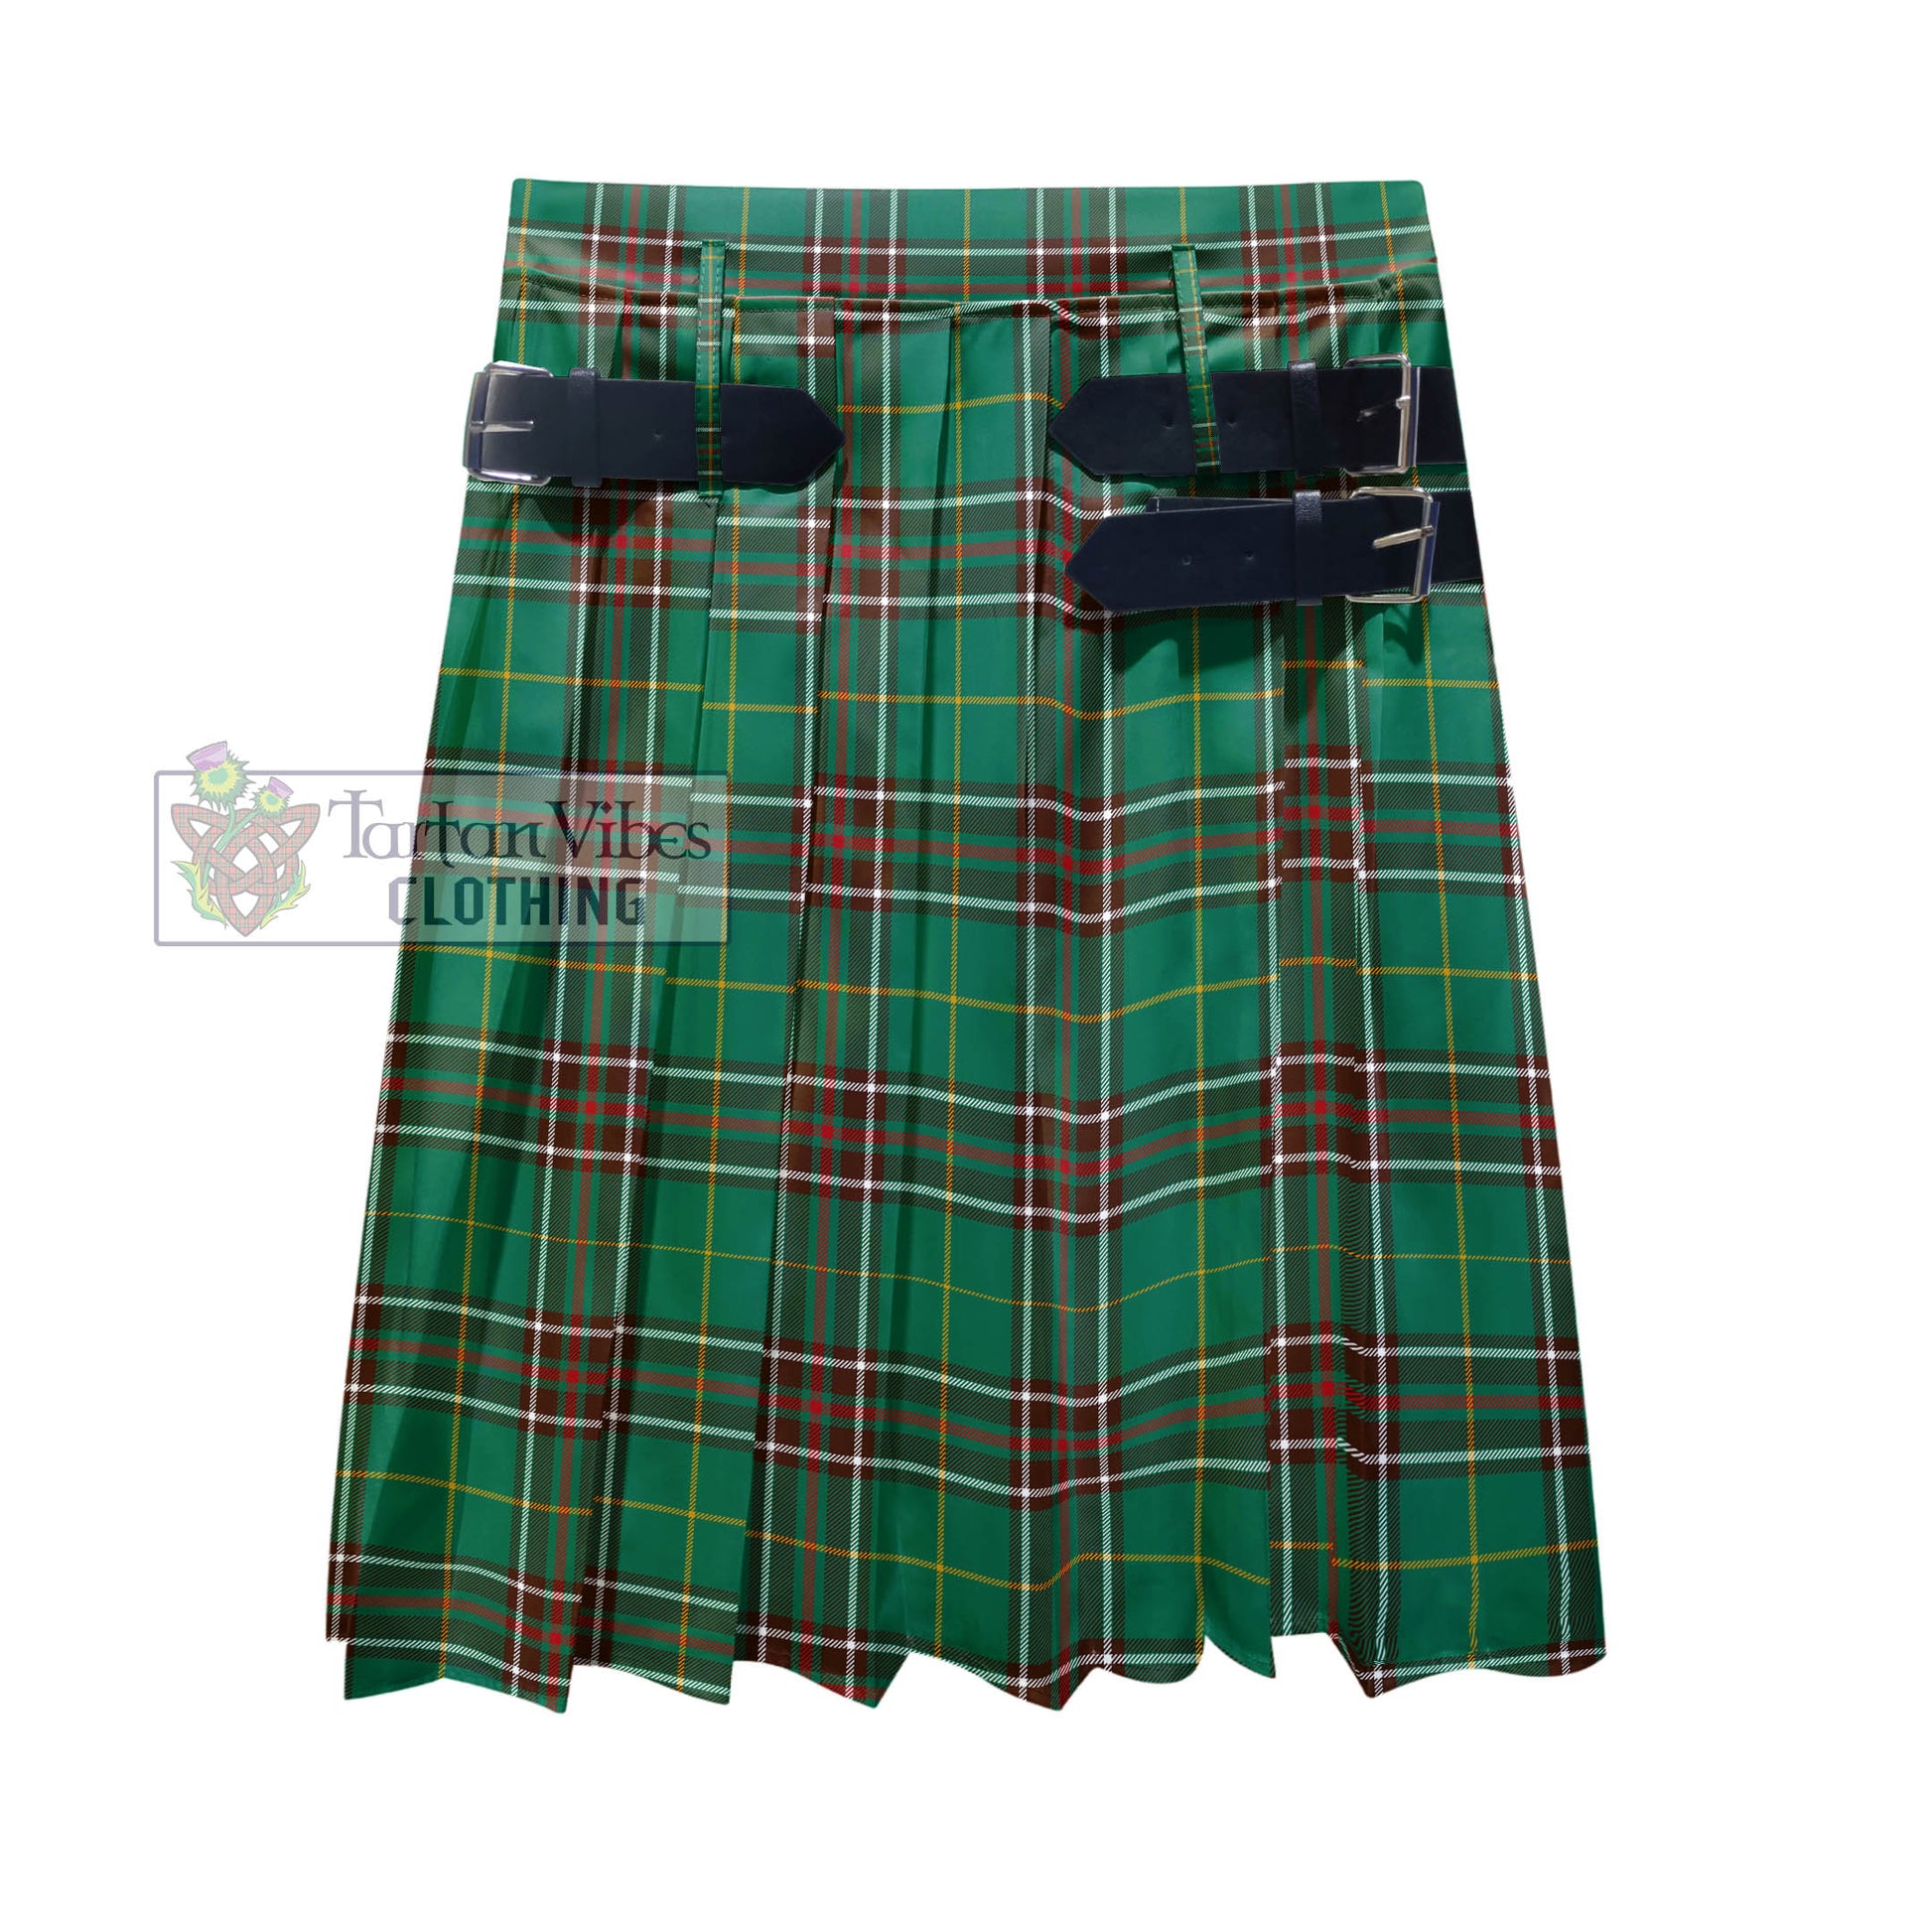 Tartan Vibes Clothing Newfoundland And Labrador Province Canada Tartan Men's Pleated Skirt - Fashion Casual Retro Scottish Style